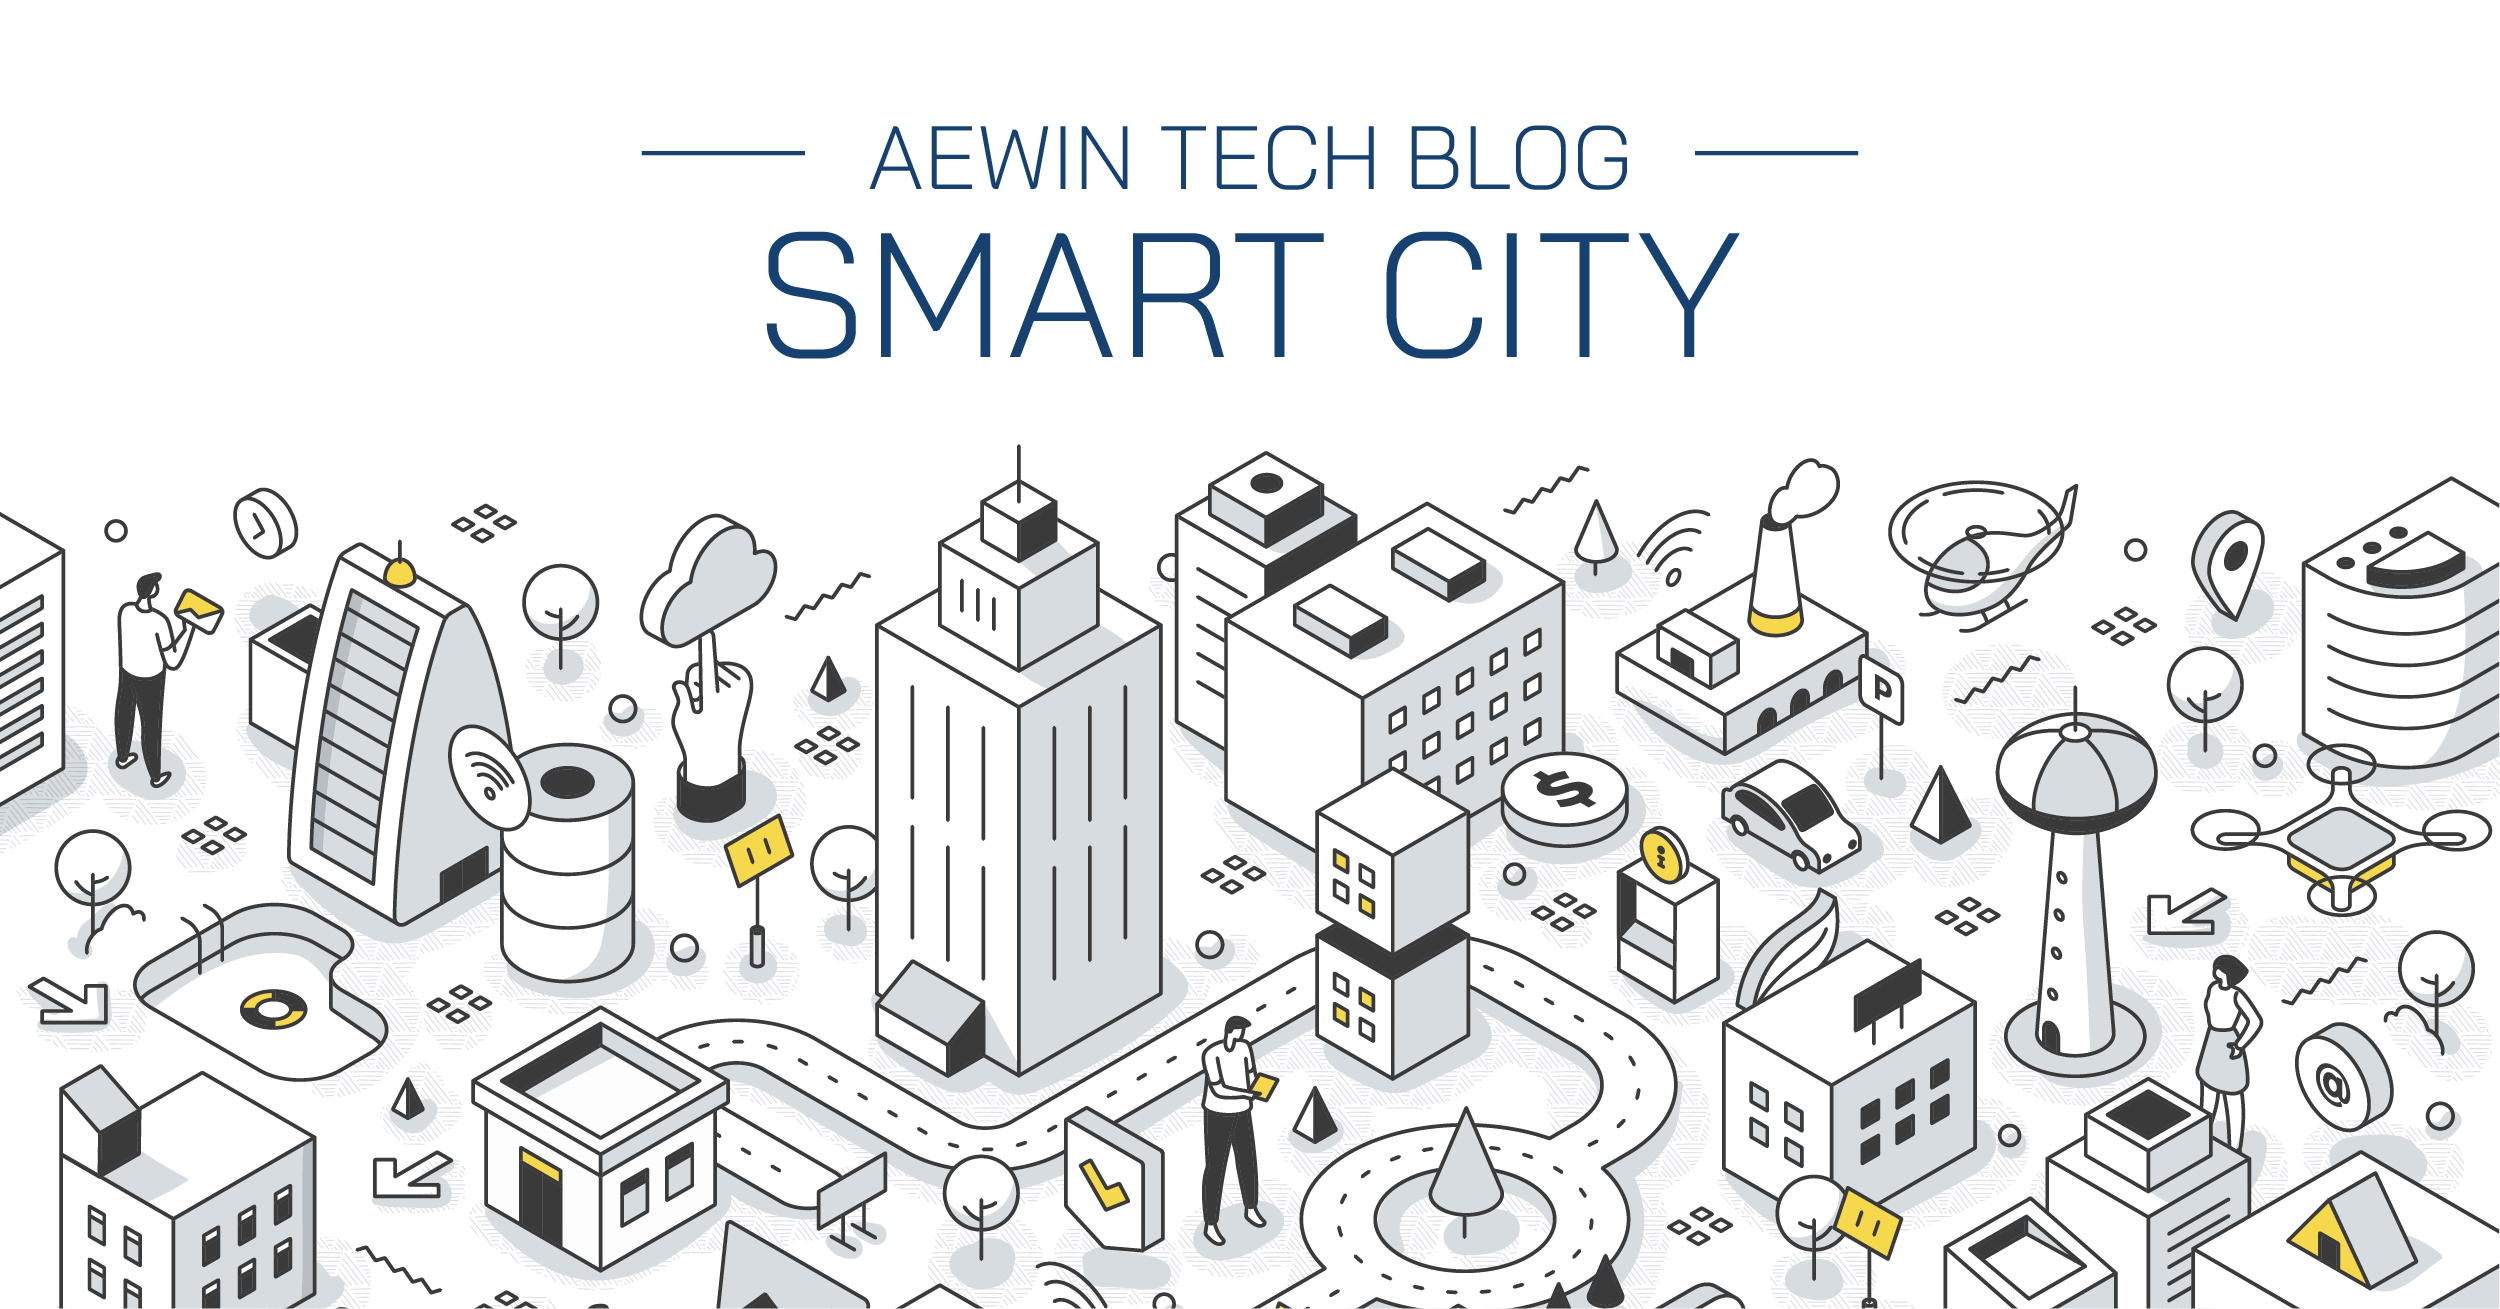 aewin's smart city solutions